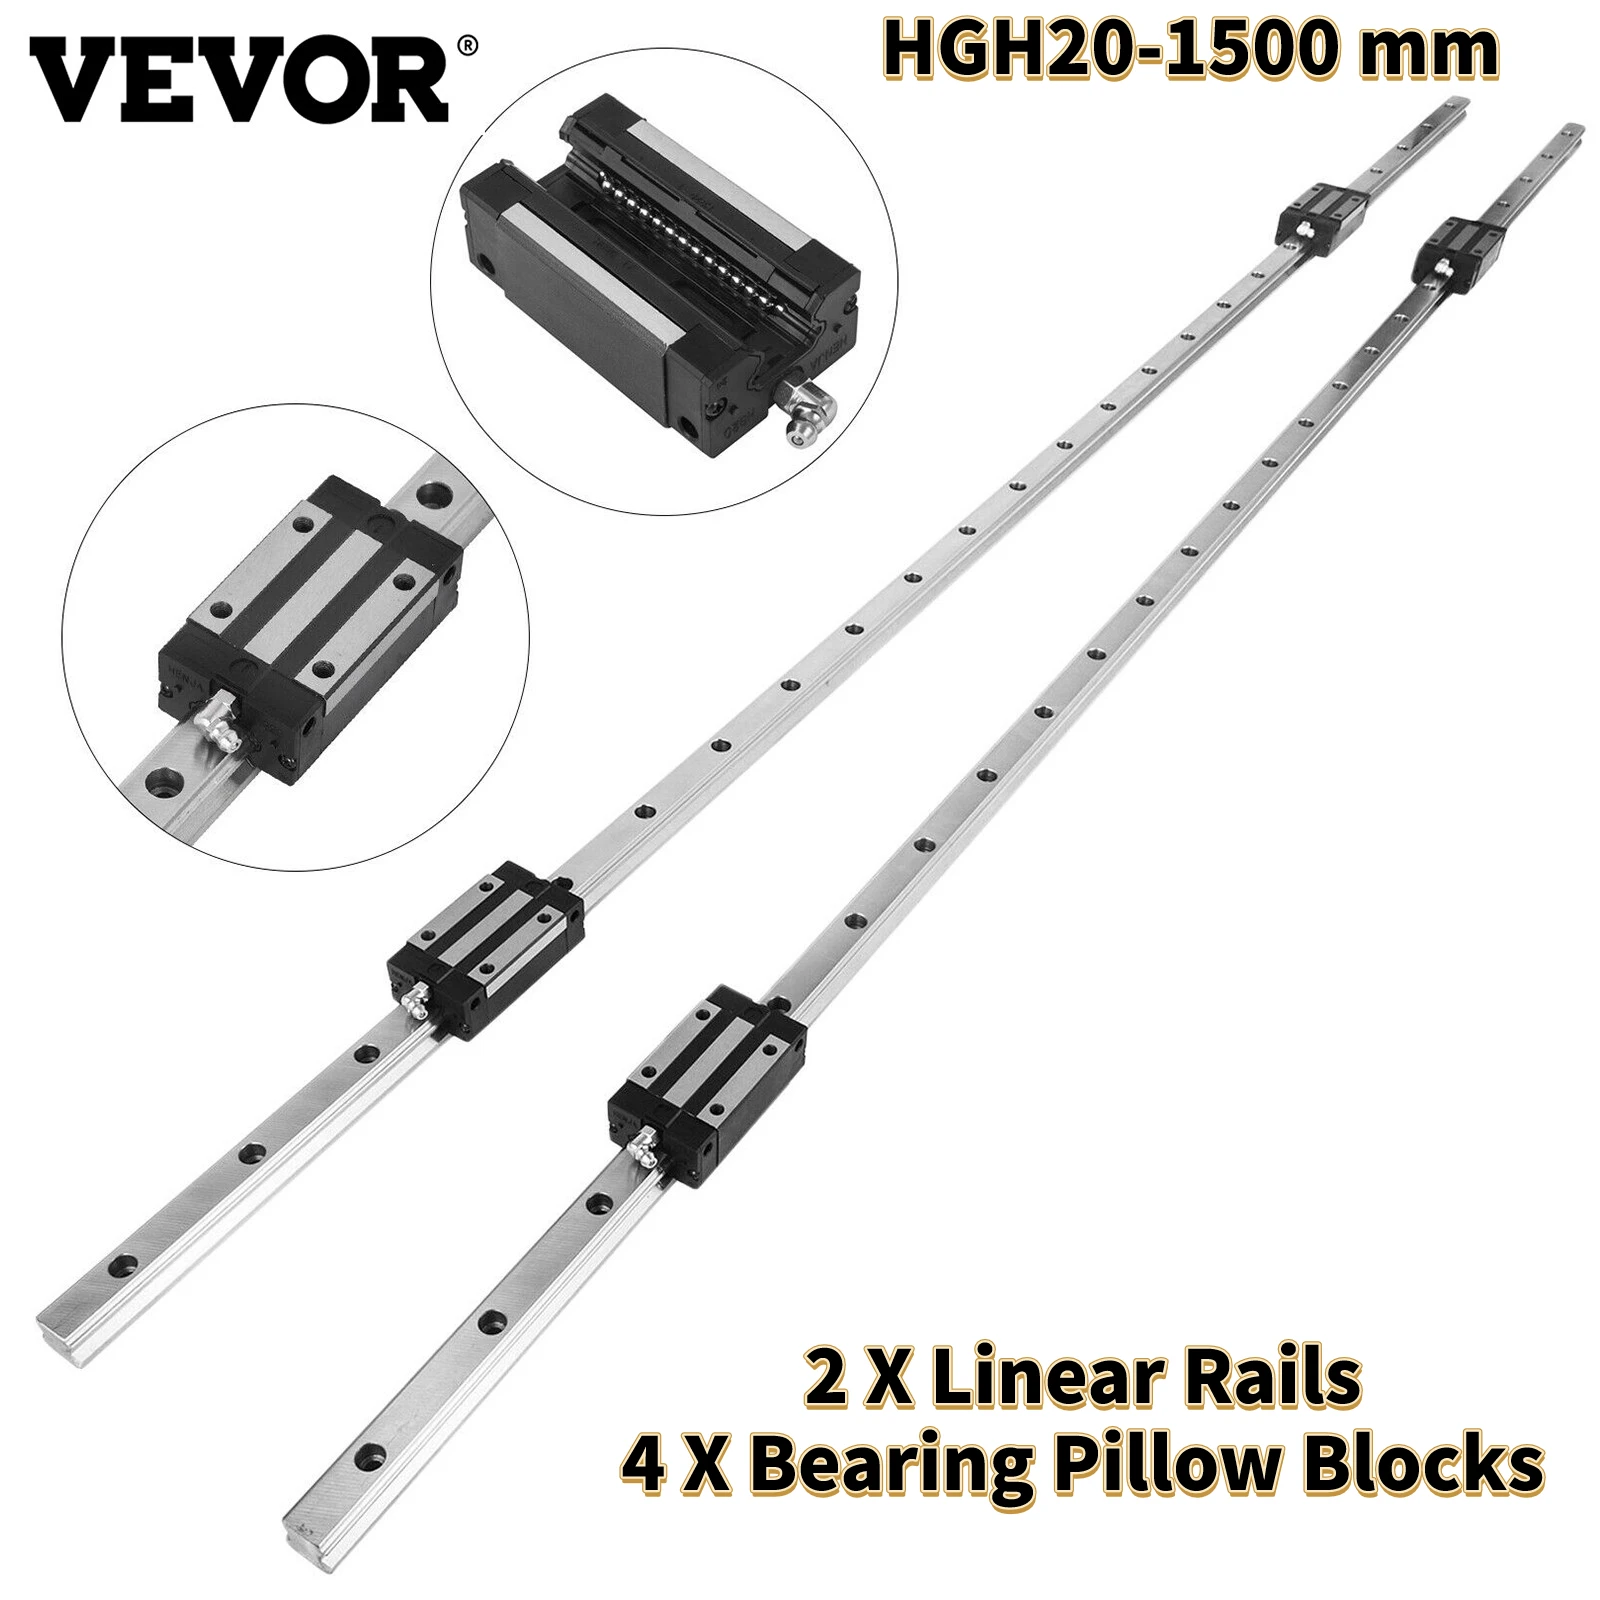 

VEVOR HGH20-1500mm 2PCS Linear Guideway Rail + 4PCS Bearing Pillow Blocks Low Noise Linear Actuator for DIY Routers Mills Lathes